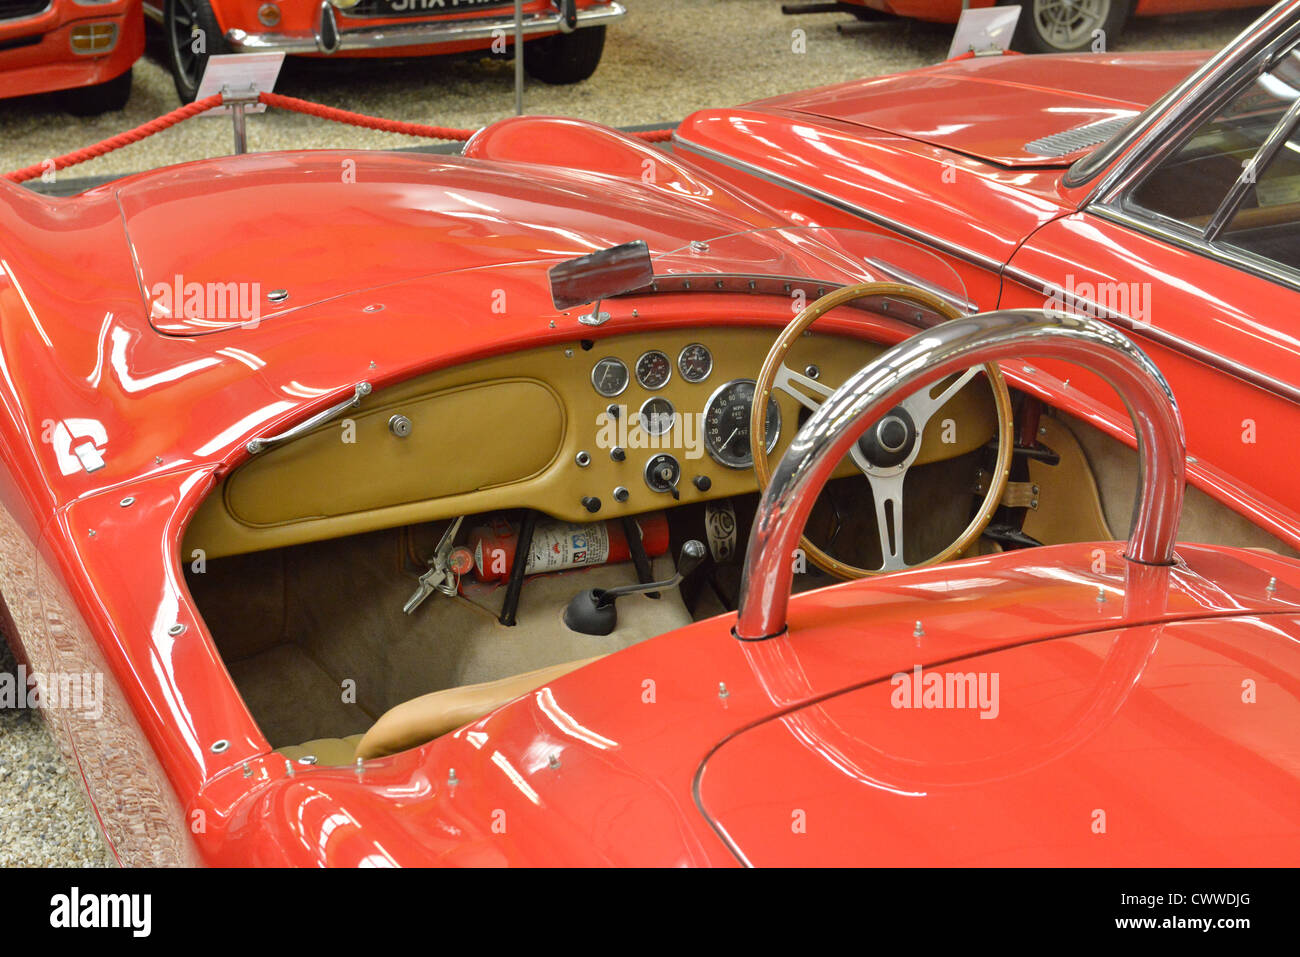 Red sports car, AC Cobra, Stock Photo